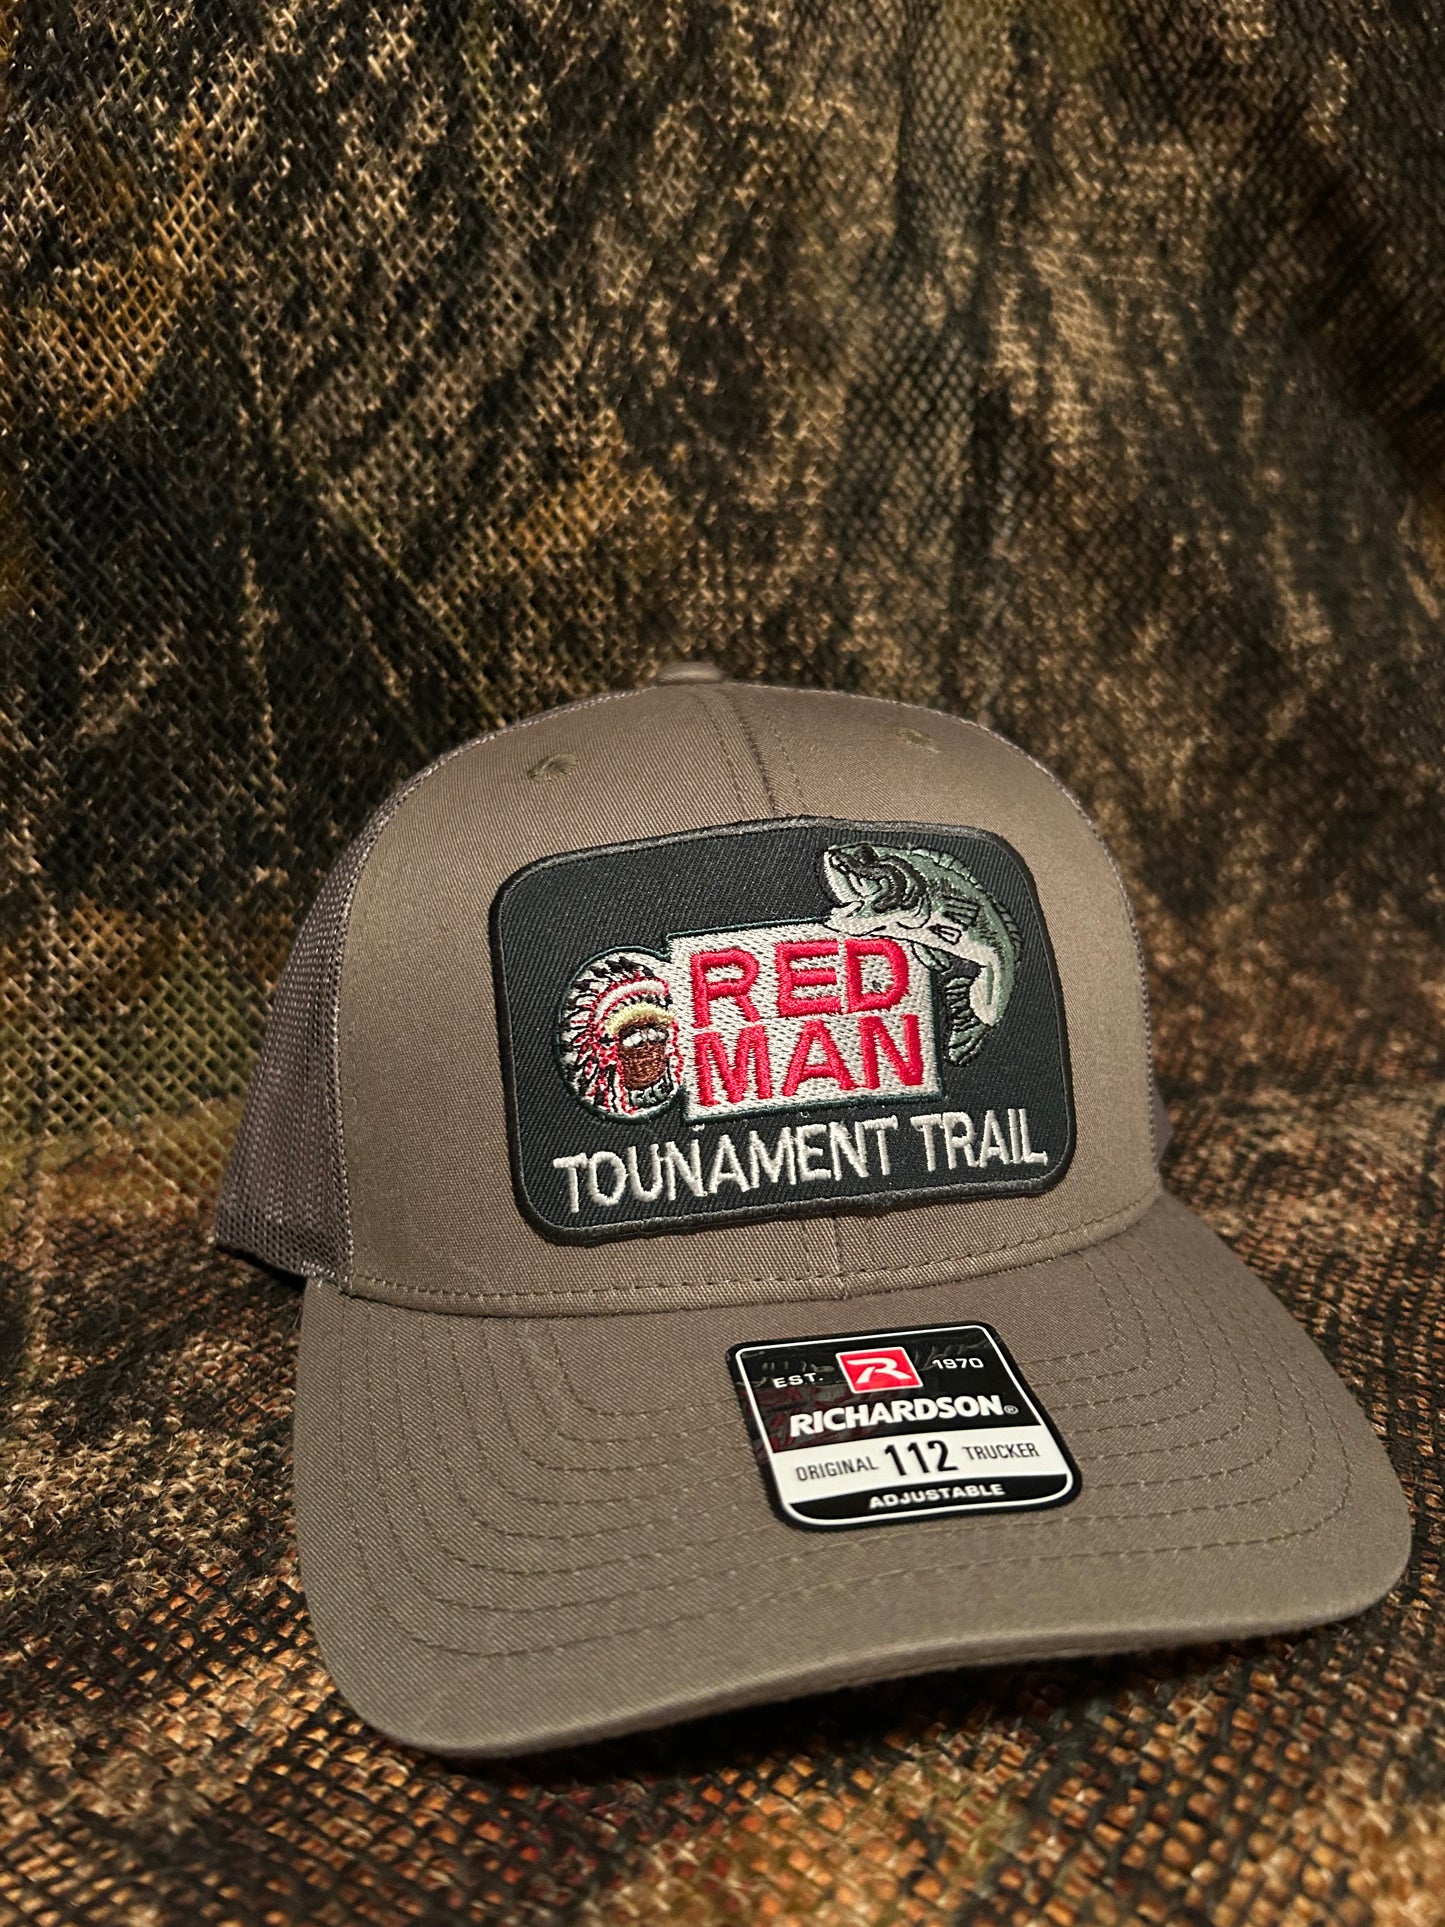 Red Man tournament Trail Olive green Richardson 112 trucker hat - Bass –  BANJO BRAND HAT CO.